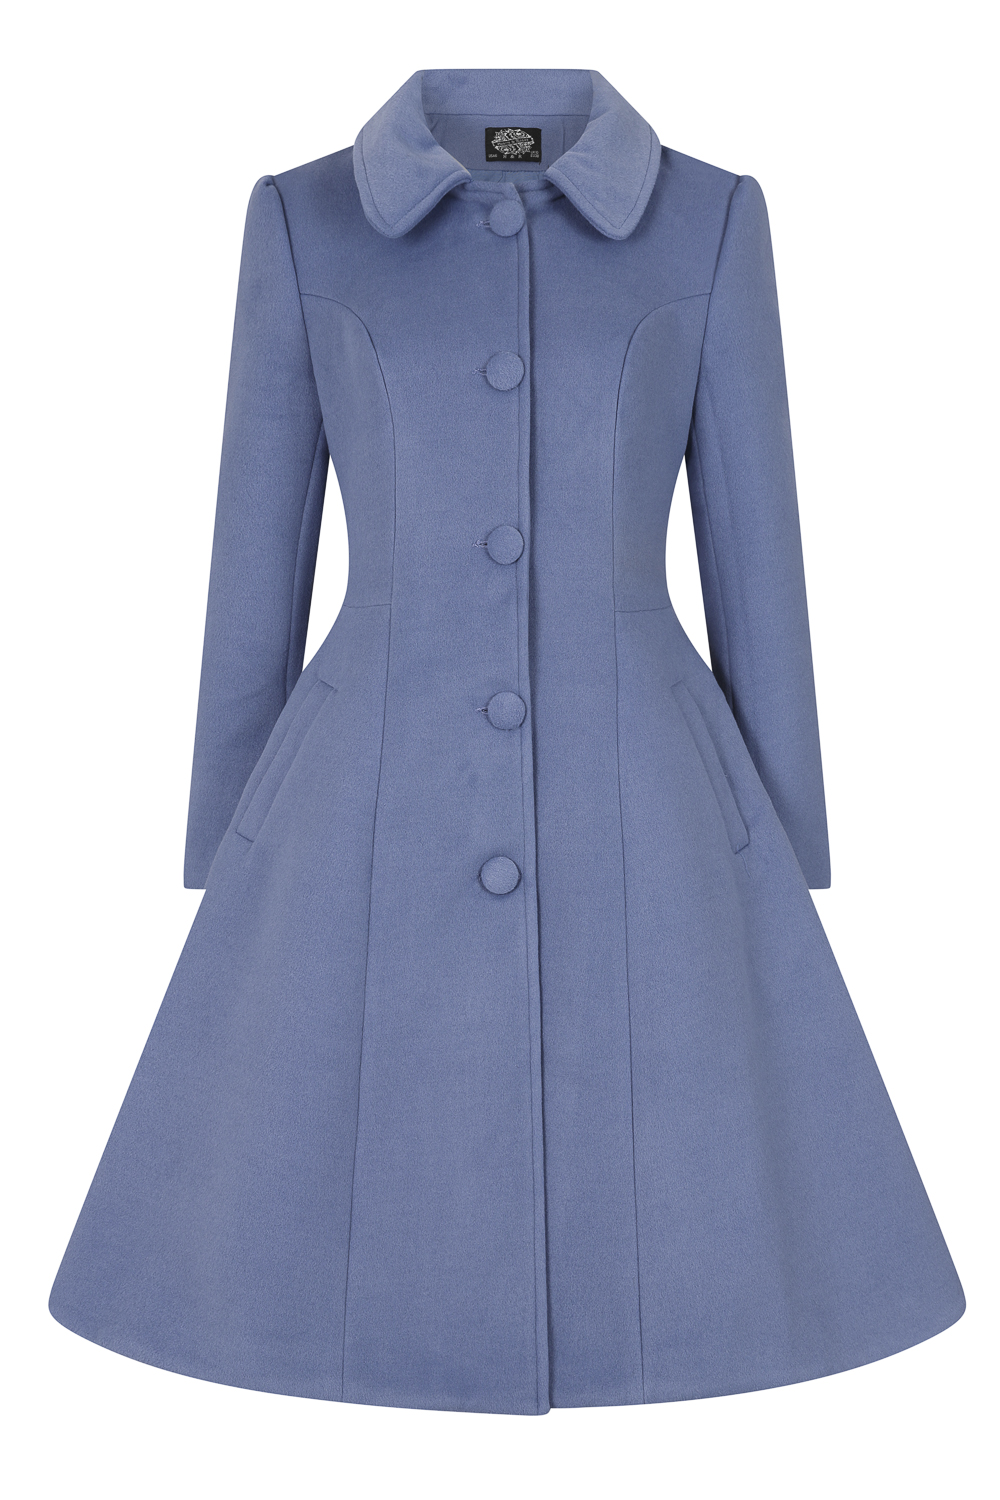 Esme Swing Coat in Blue - Hearts & Roses London